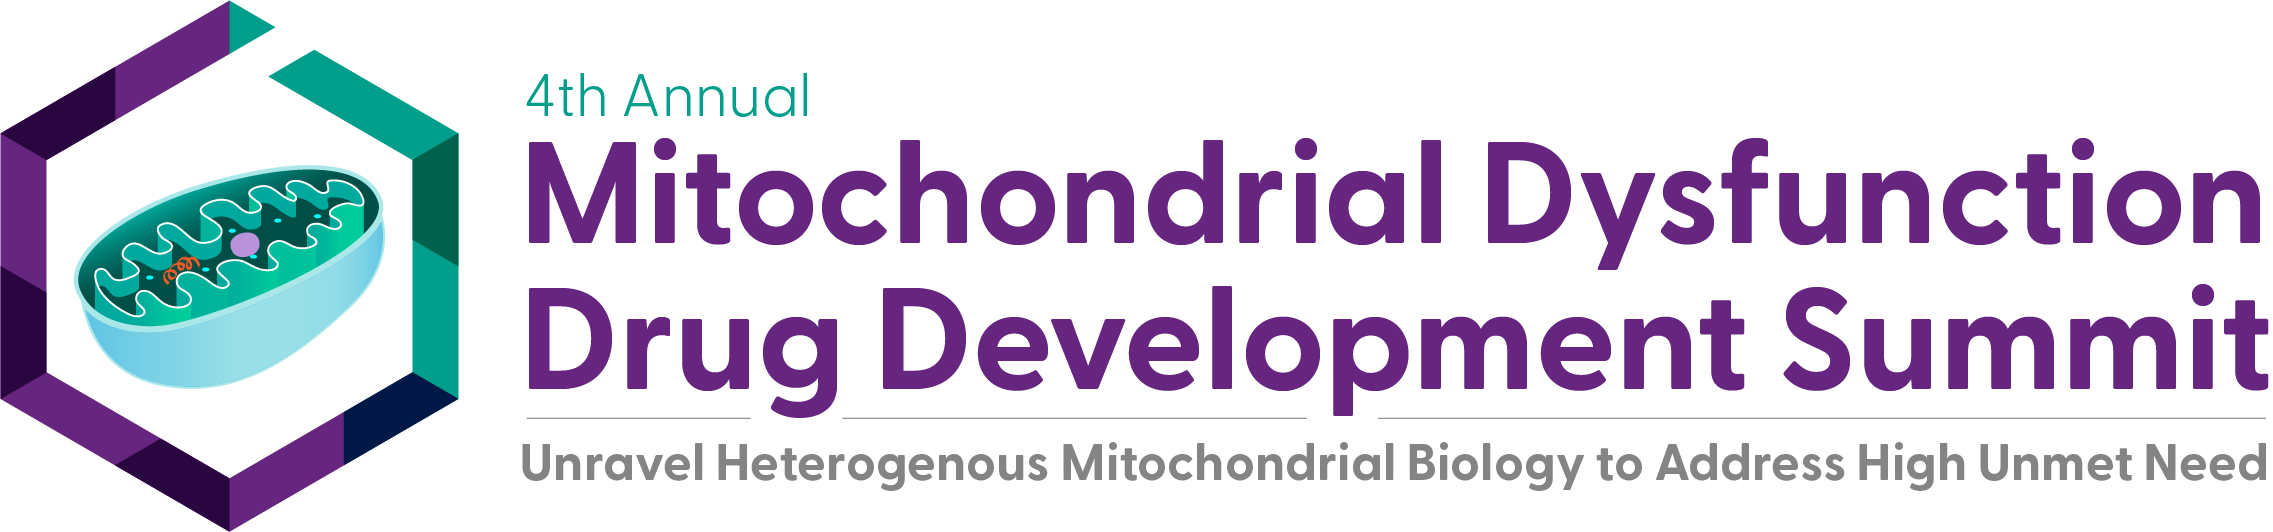 HW240515 4th Mitochondrial Dysfunction Drug Development Summit logo TAG